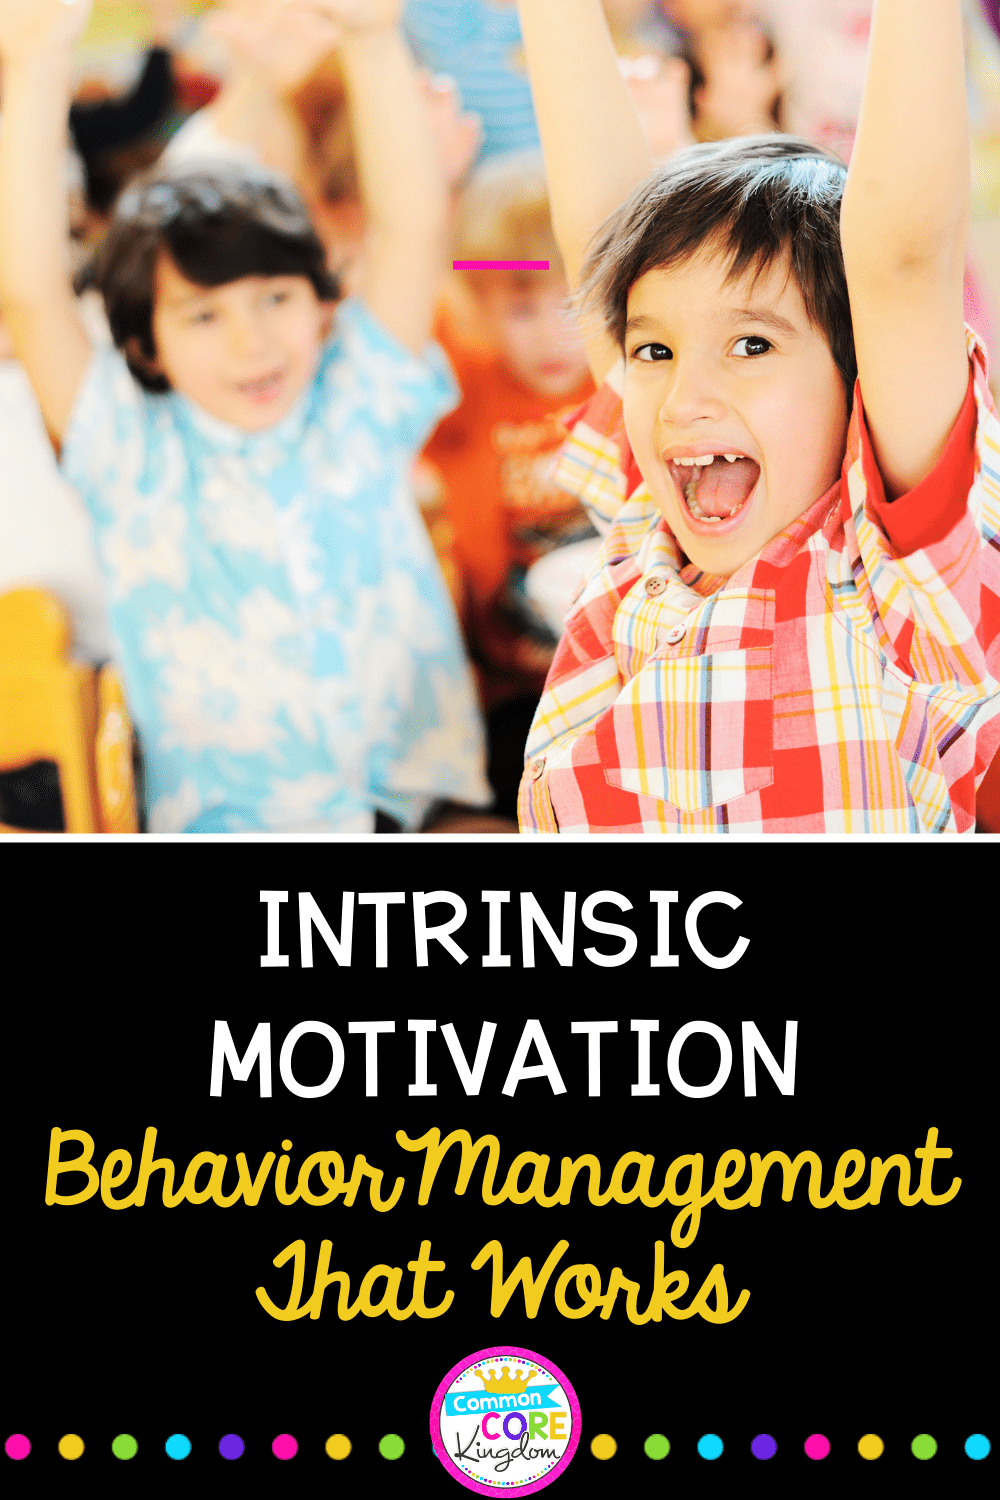 Behavior management that works using intrinsic motivation